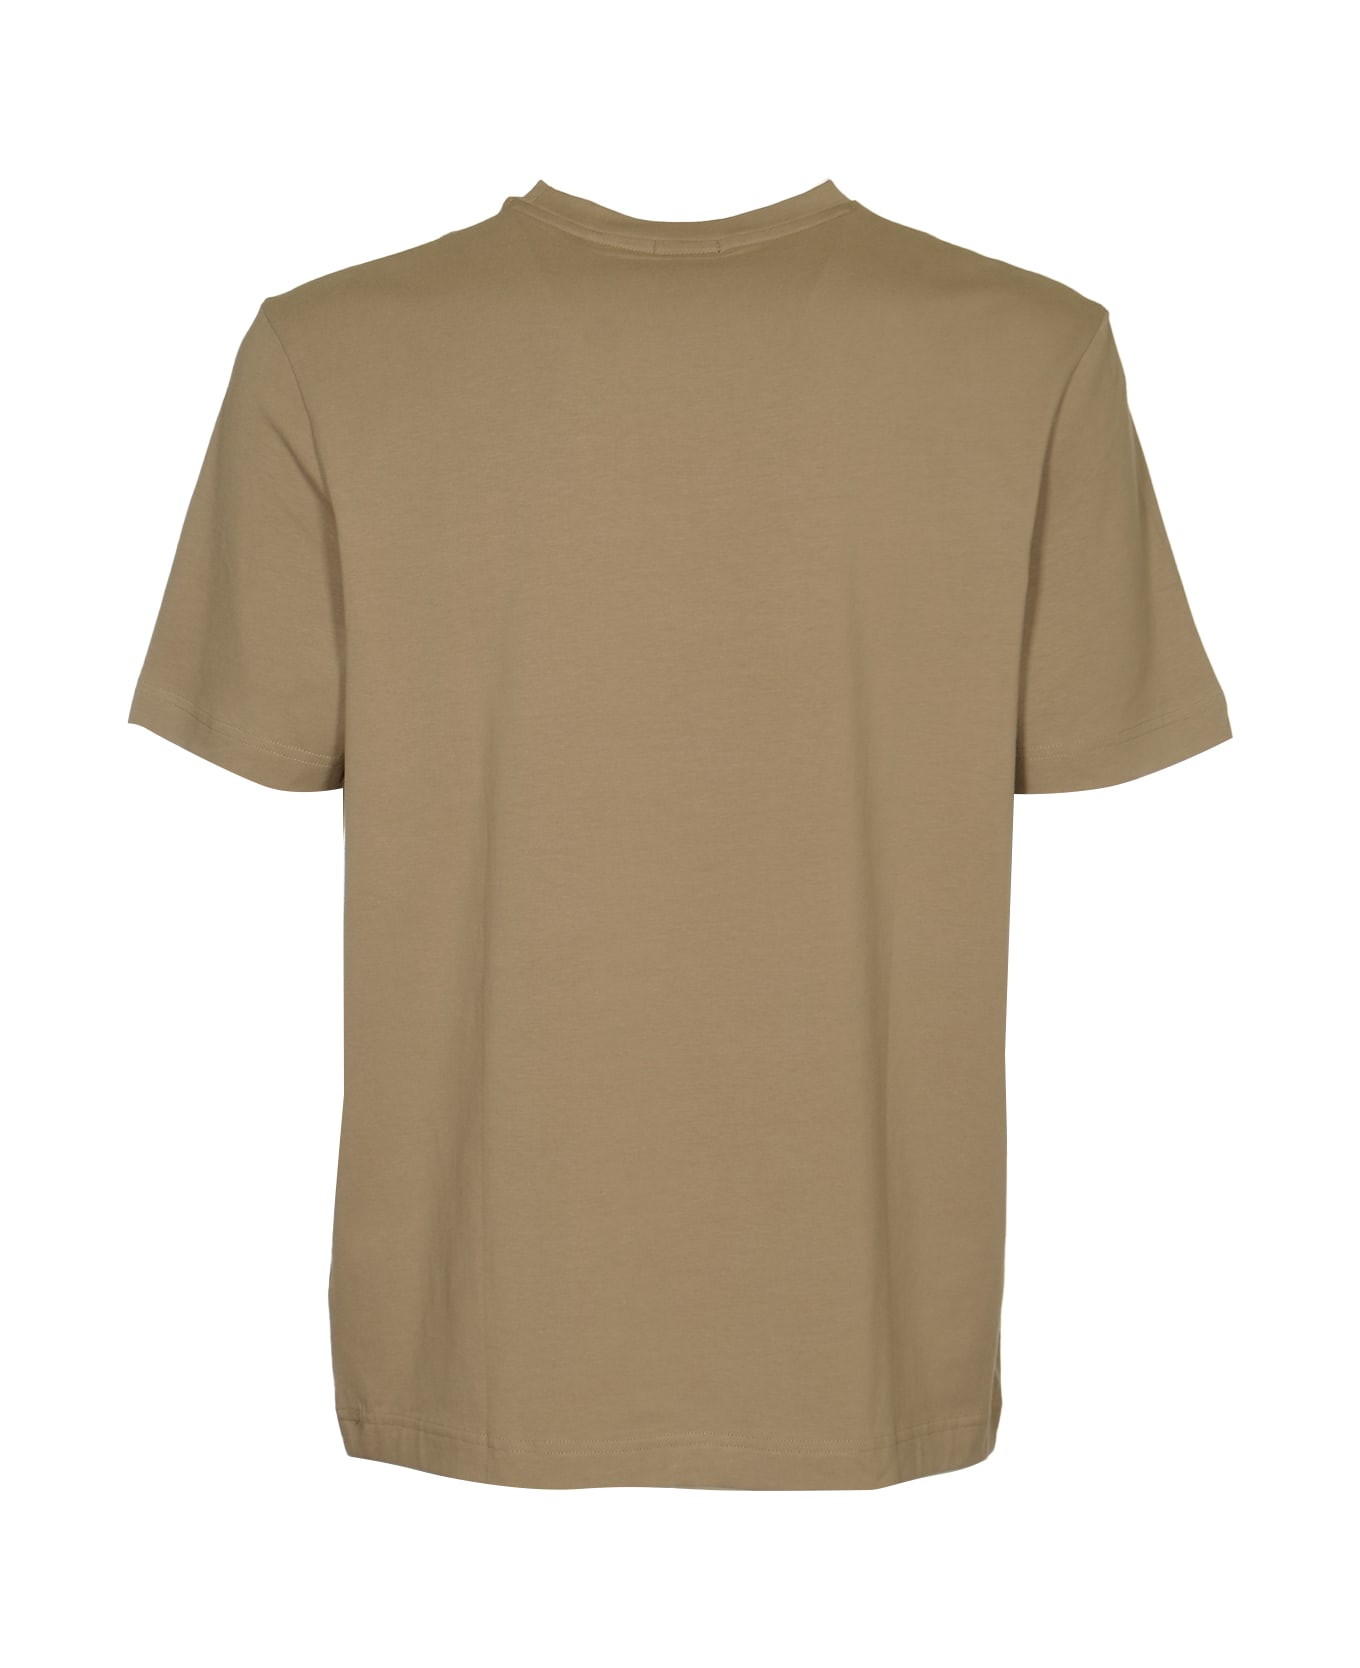 Hugo Boss Logo Classic T-shirt - Open Brown シャツ